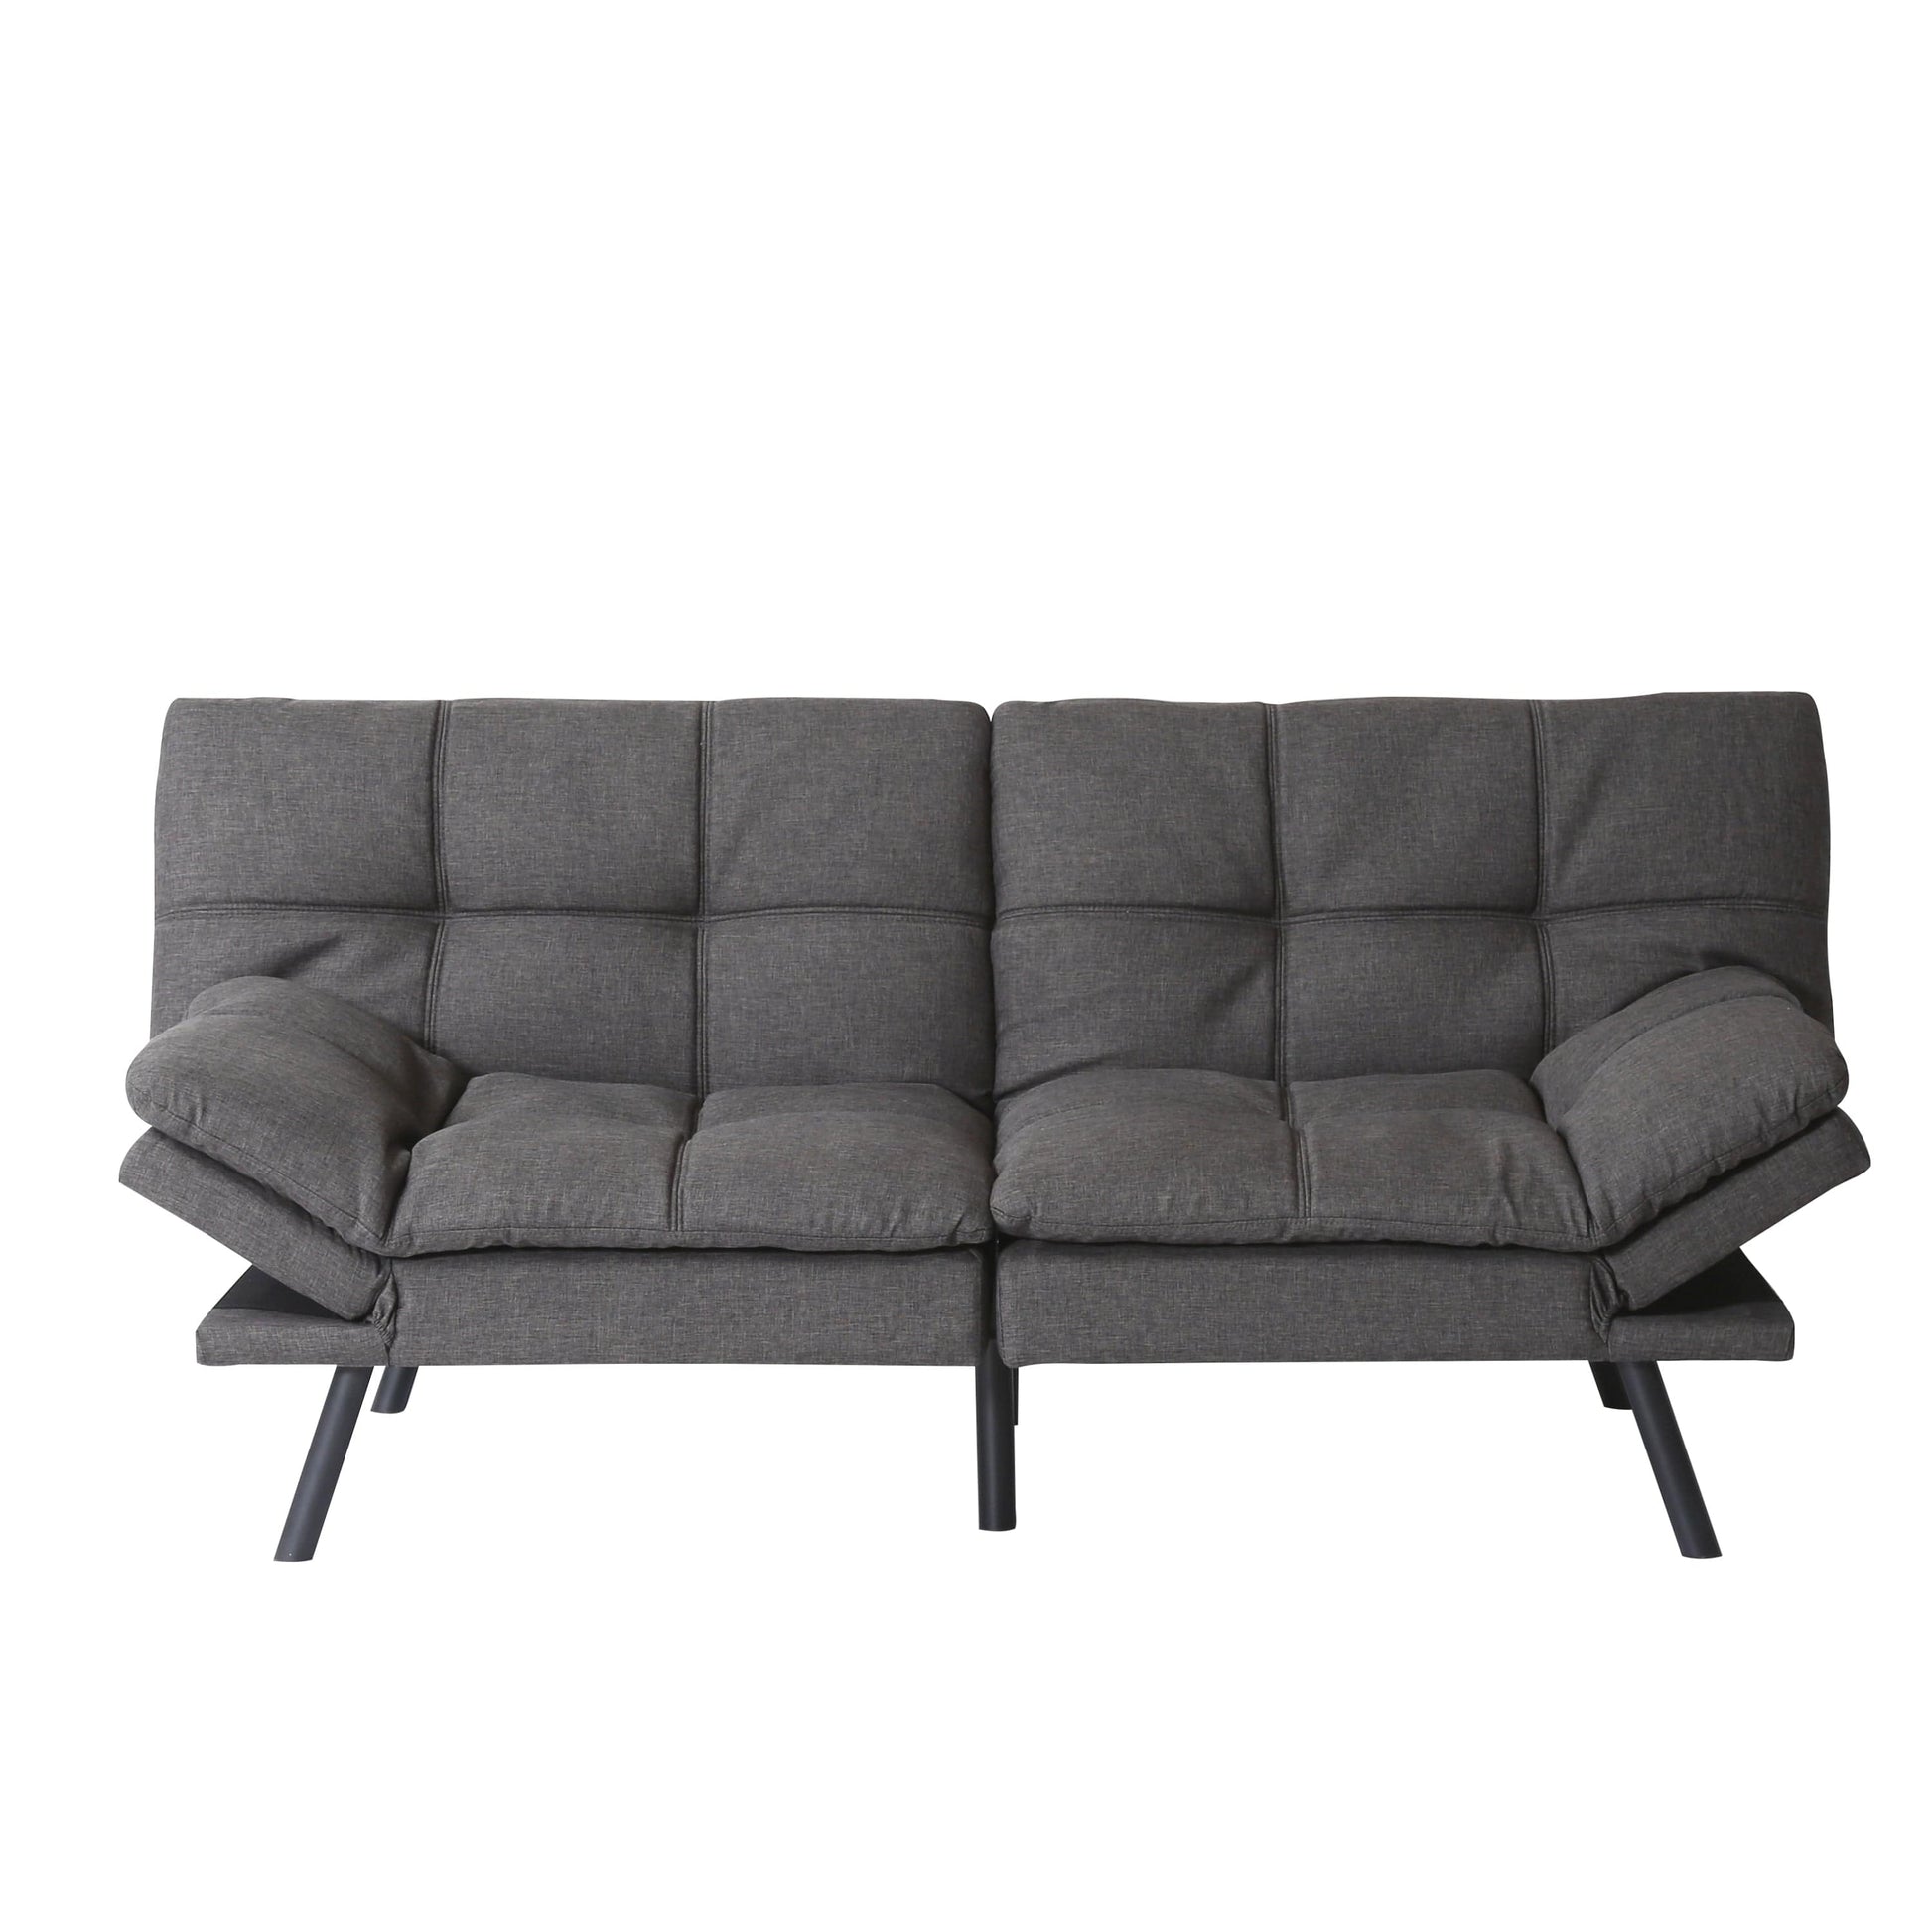 1st Choice Furniture Direct Sofa 1st Choice Modern Memory Foam Convertible Futon Sofa Bed